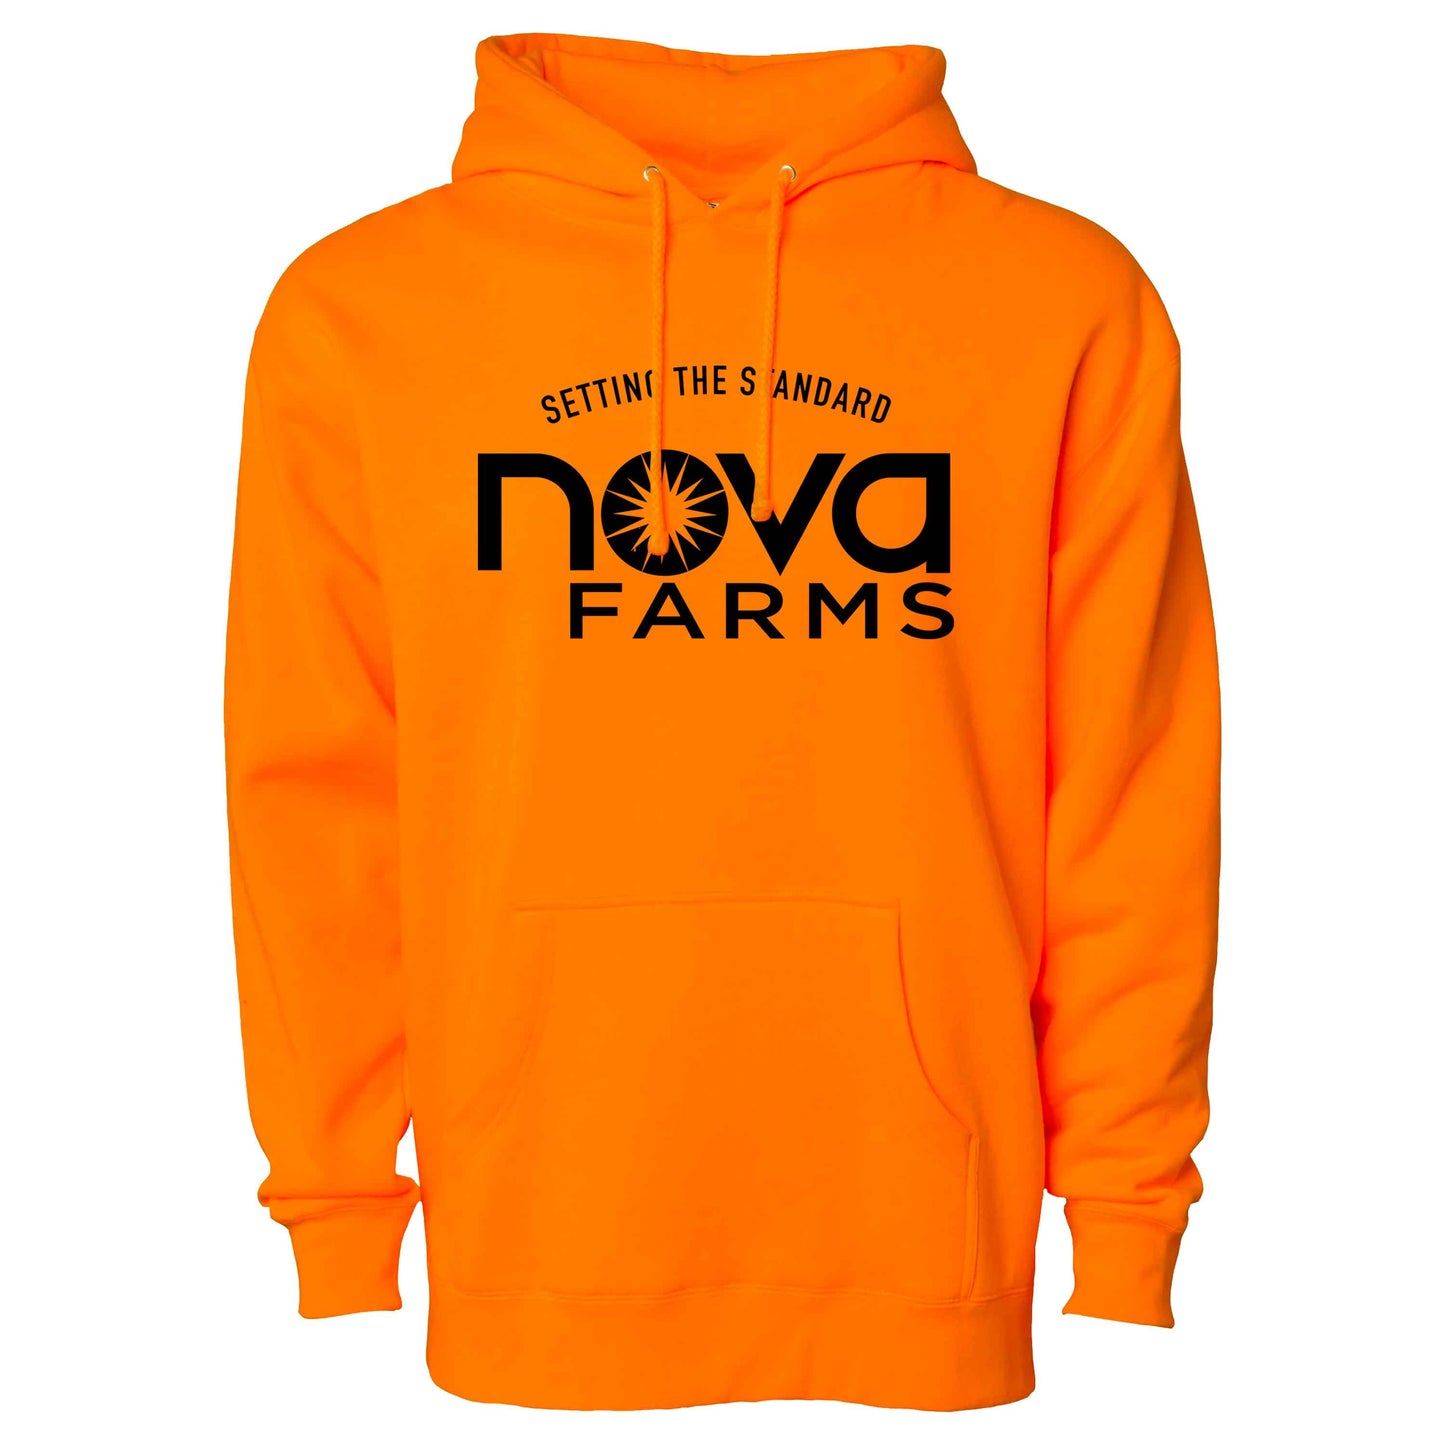 Nova Farms - Setting the Standard - Safety Orange Sweatshirt